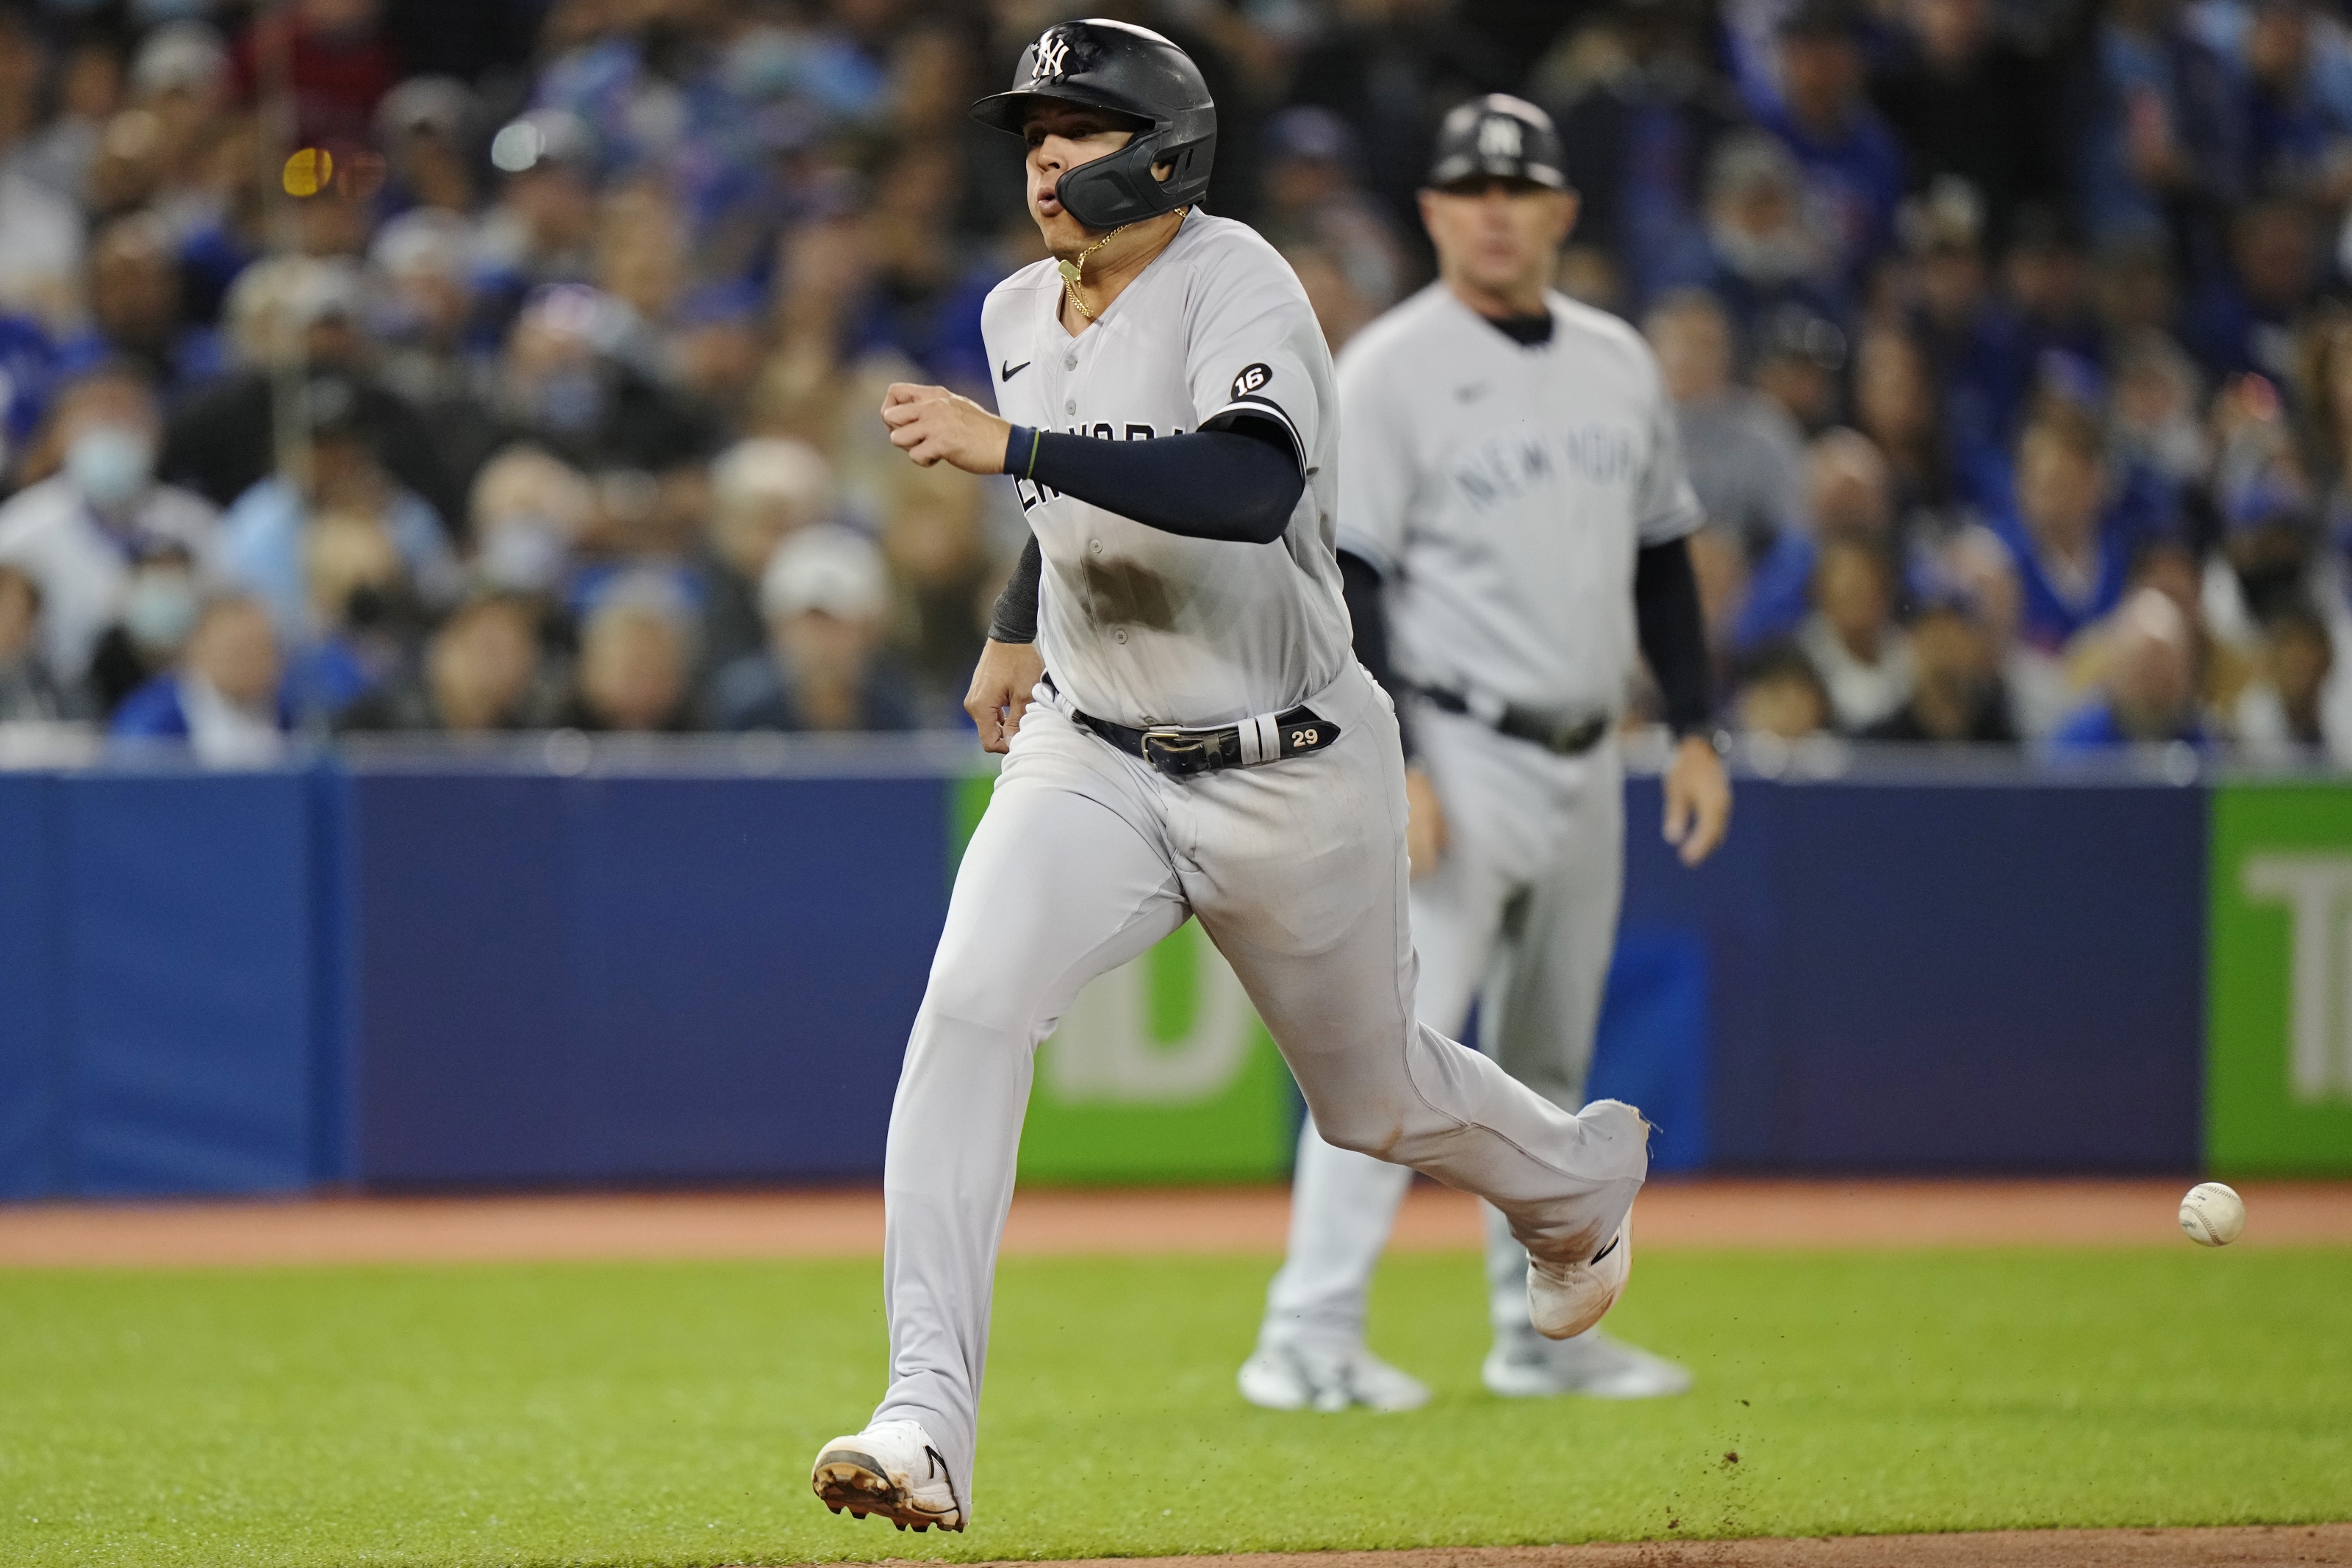 Paul O'Neill recalls final Yankees game, how close he came to